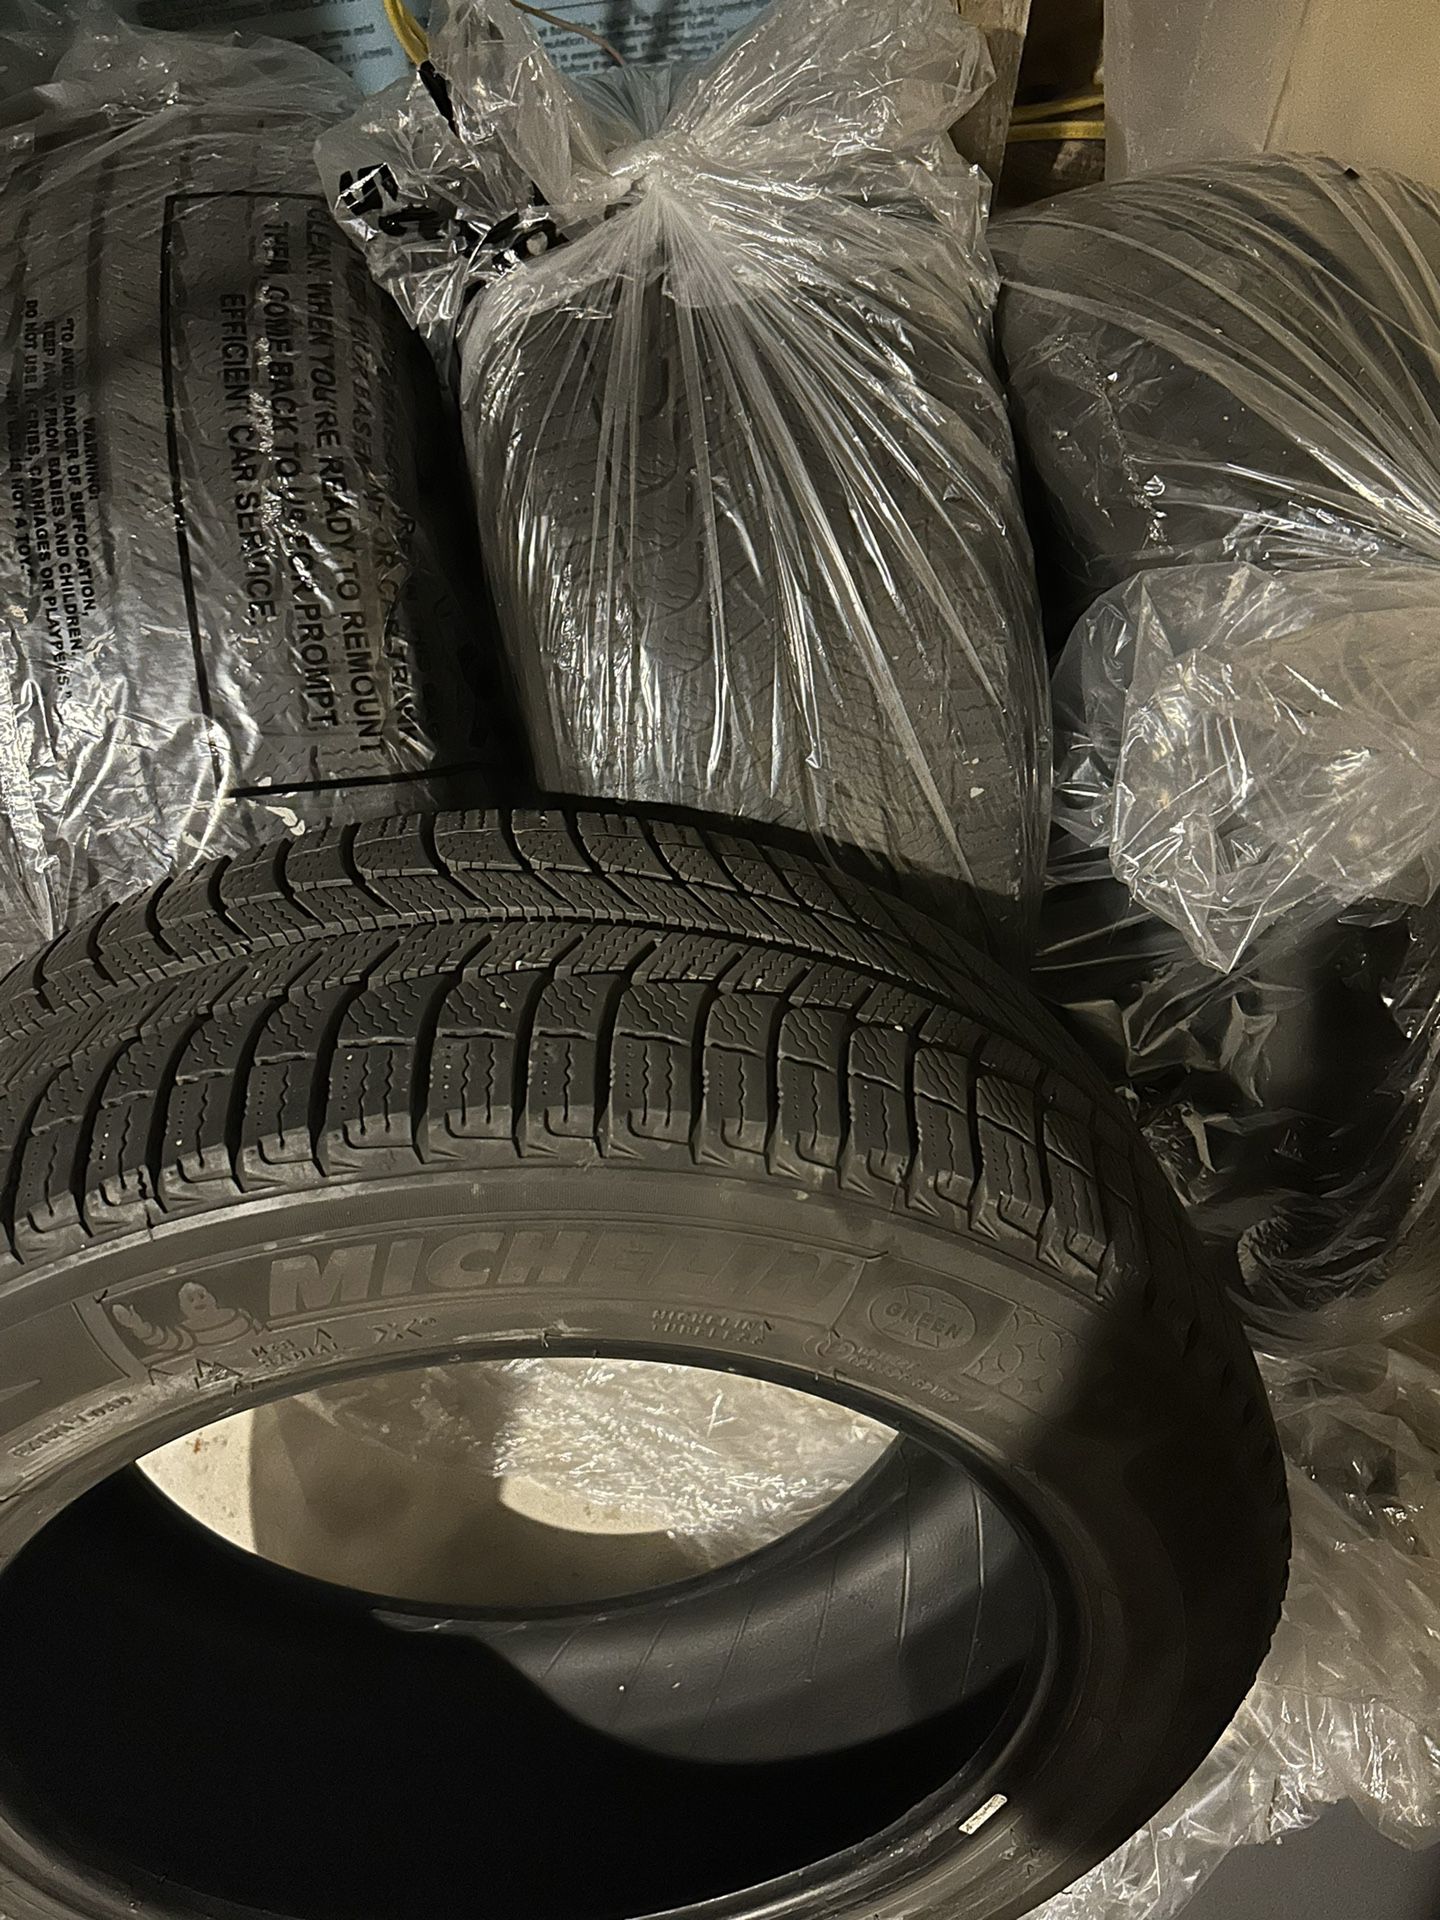 215/55/r17 Michelin X Snow Tires